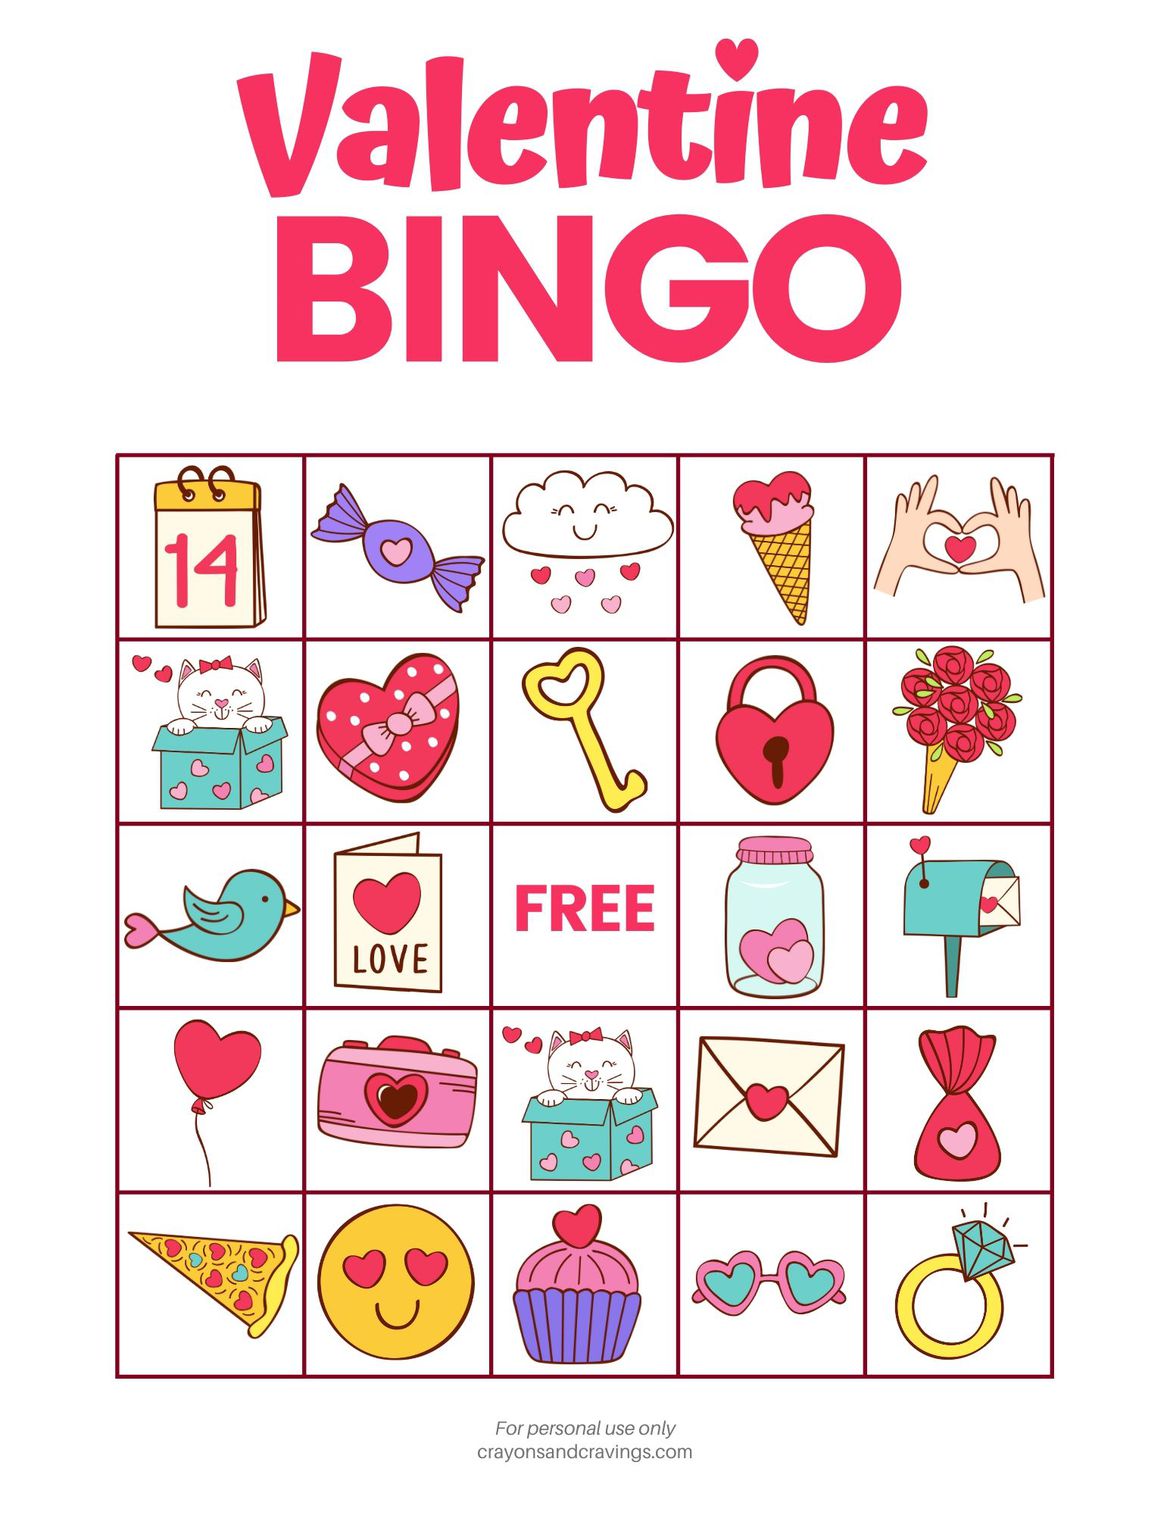 Free Valentine Bingo Printables